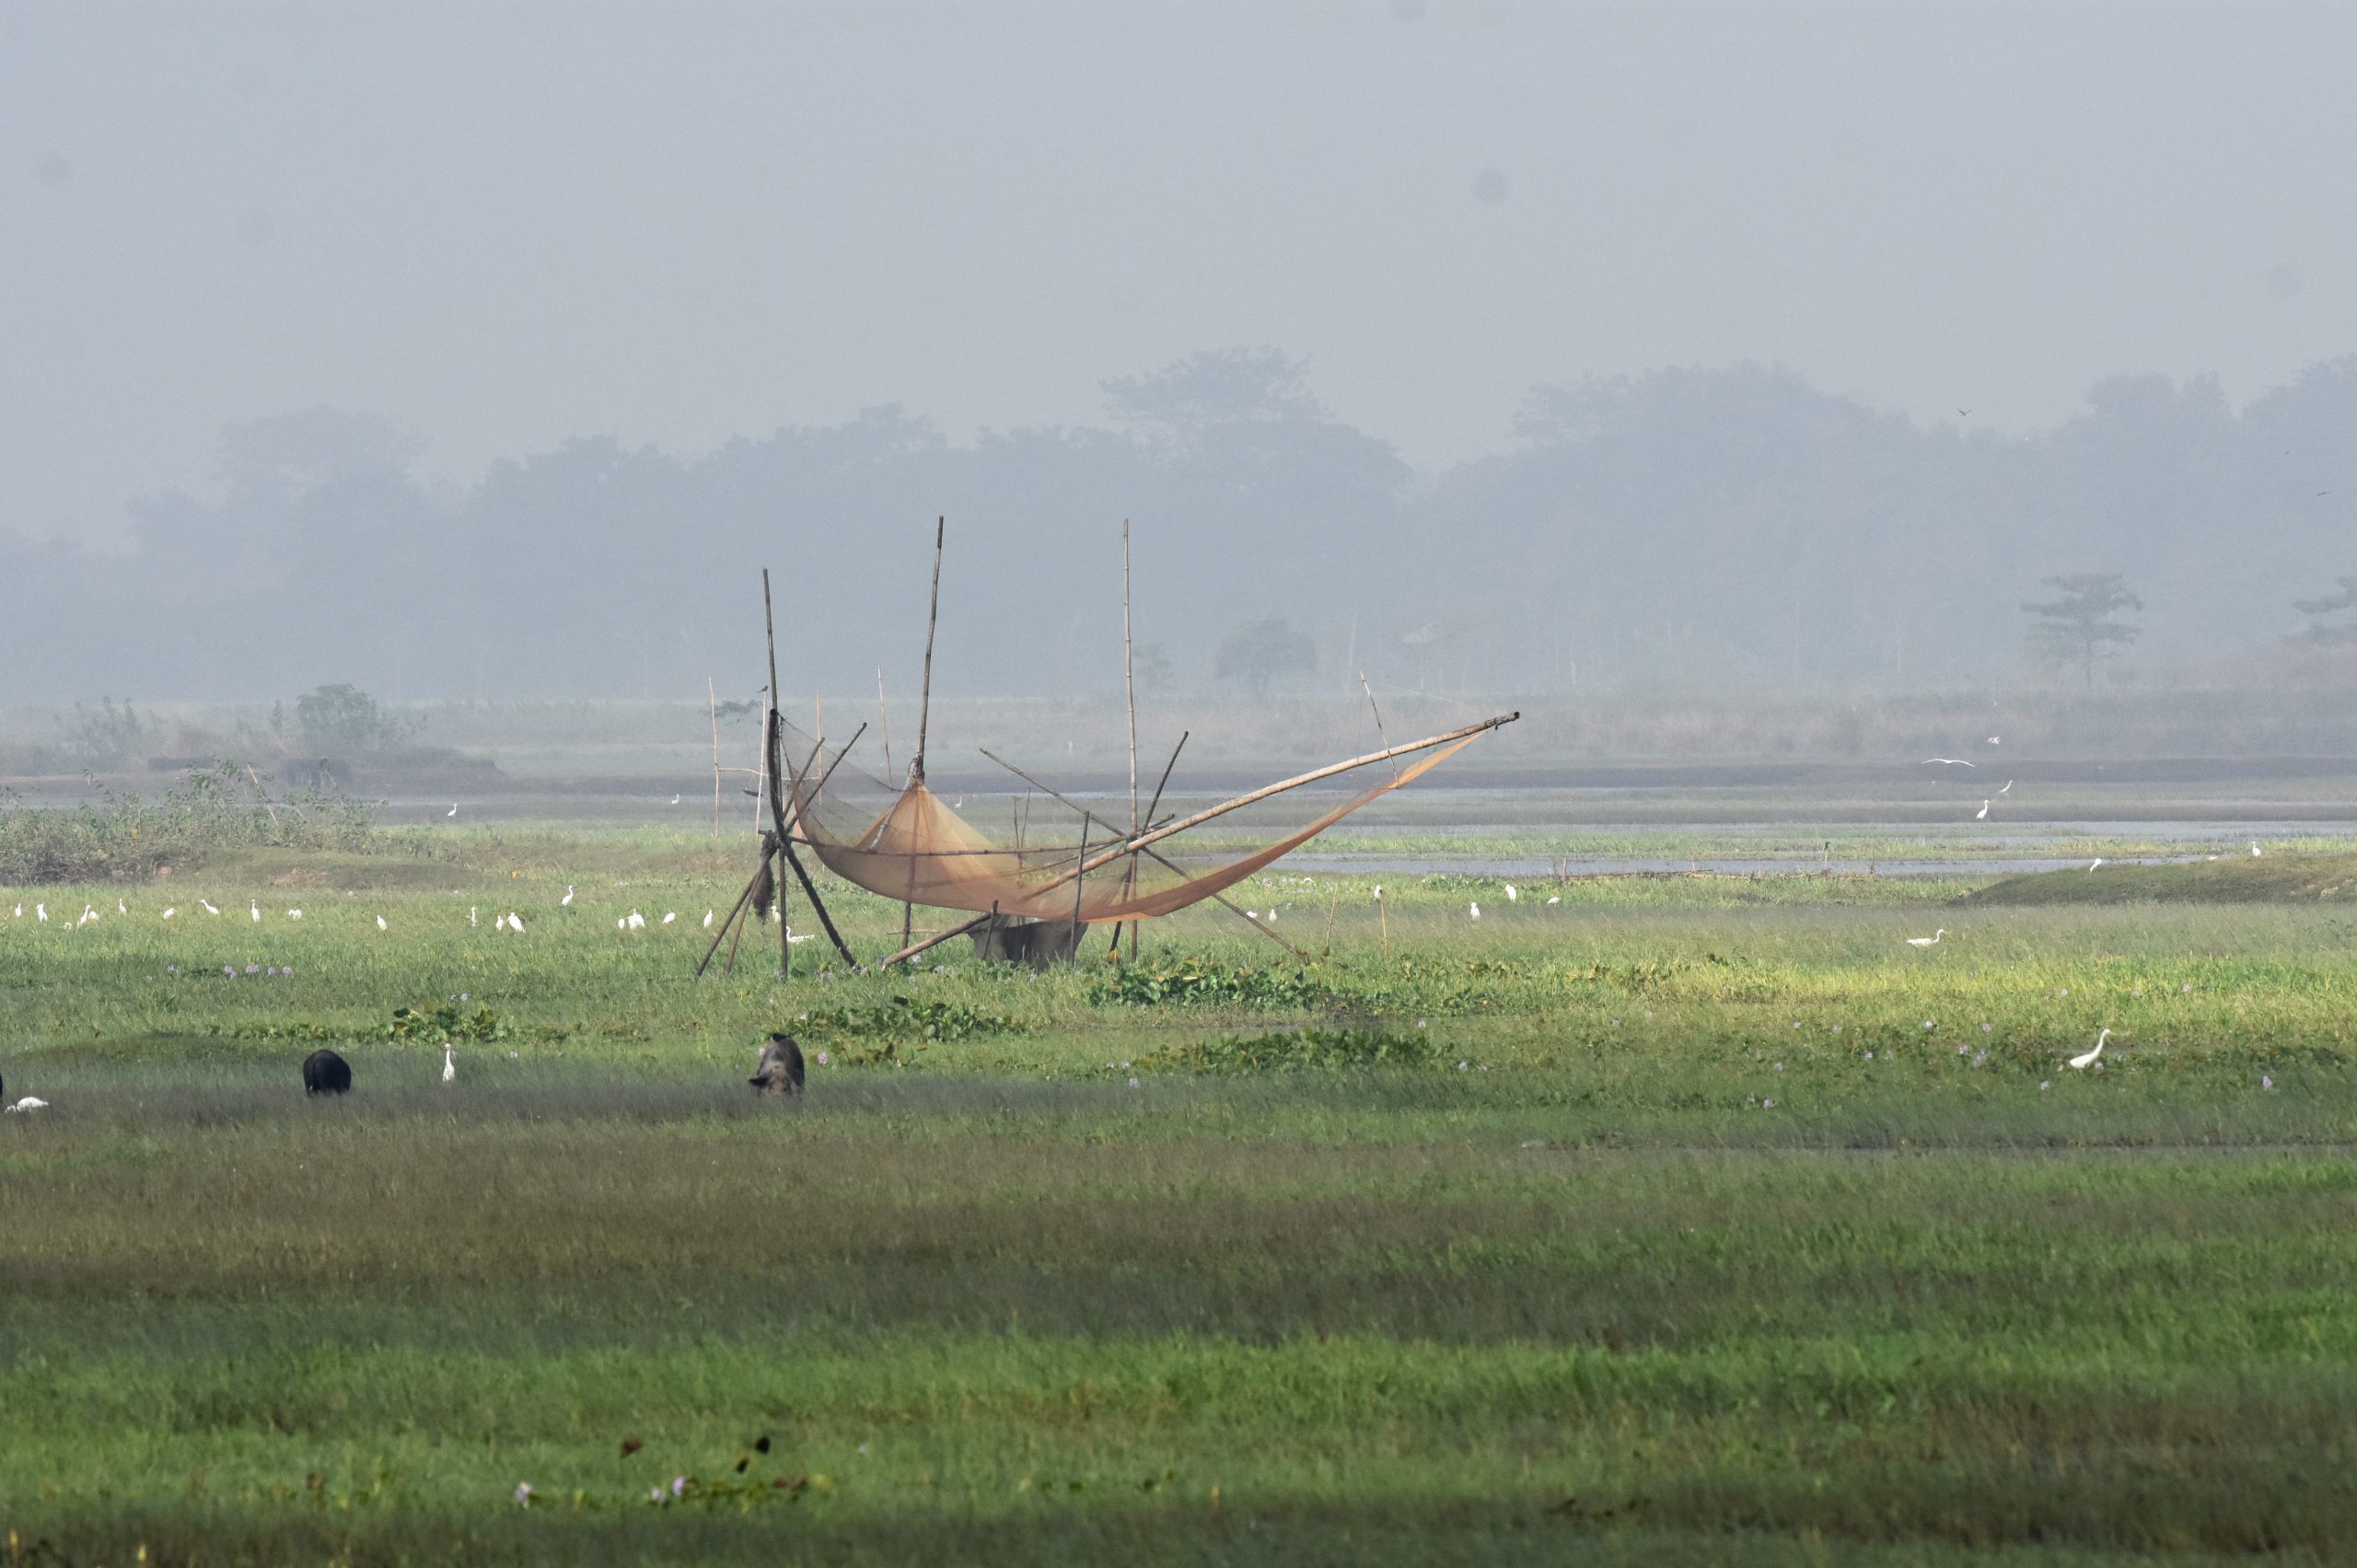 A fishing net in grass land